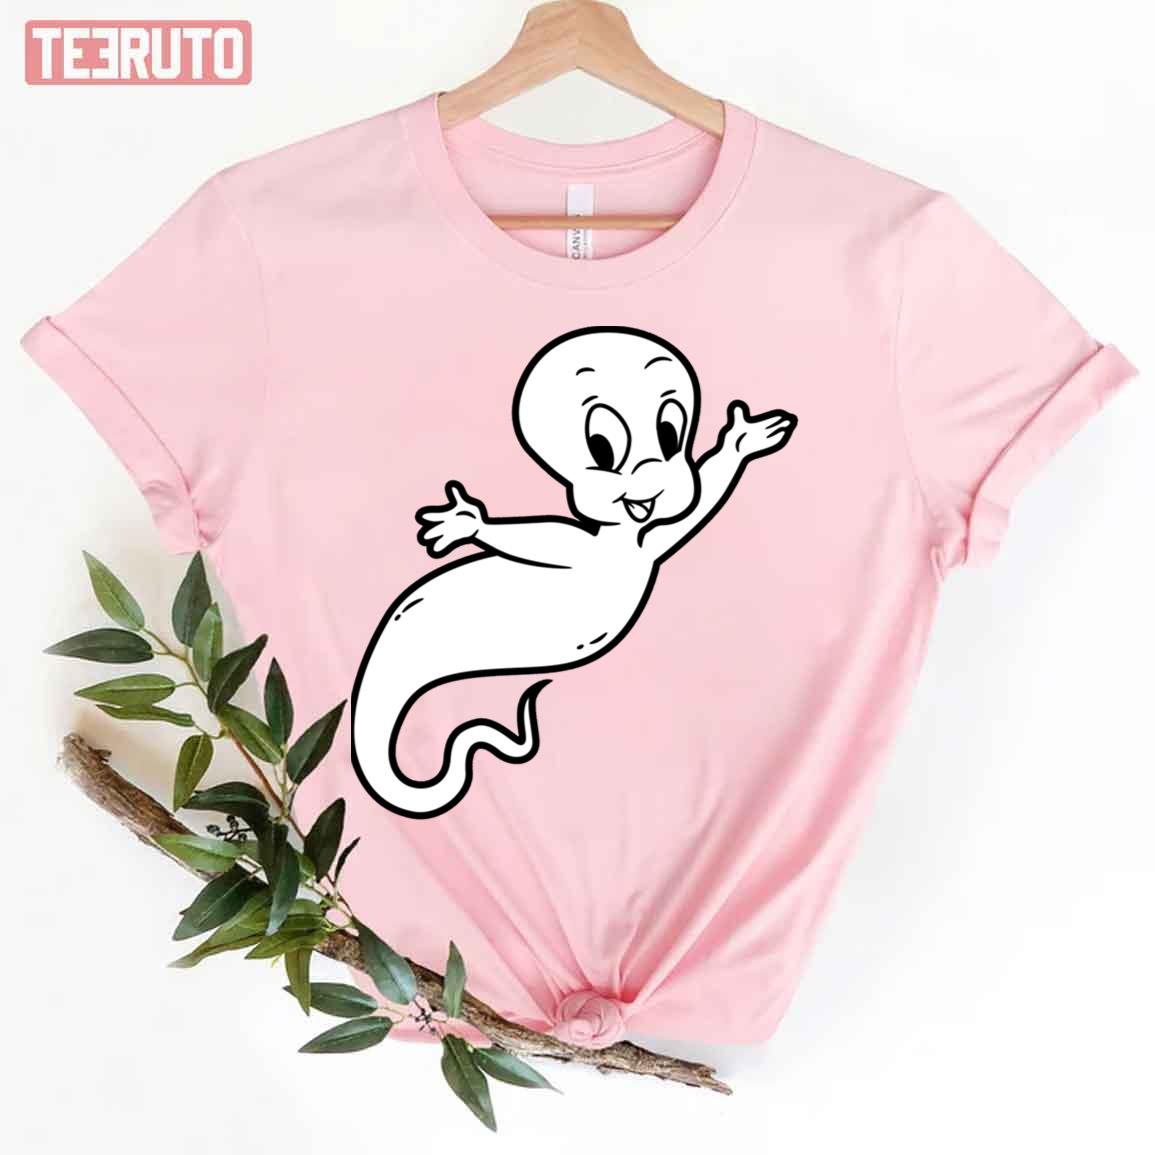 Casper The Ghost Cute Cartoon Unisex T-Shirt